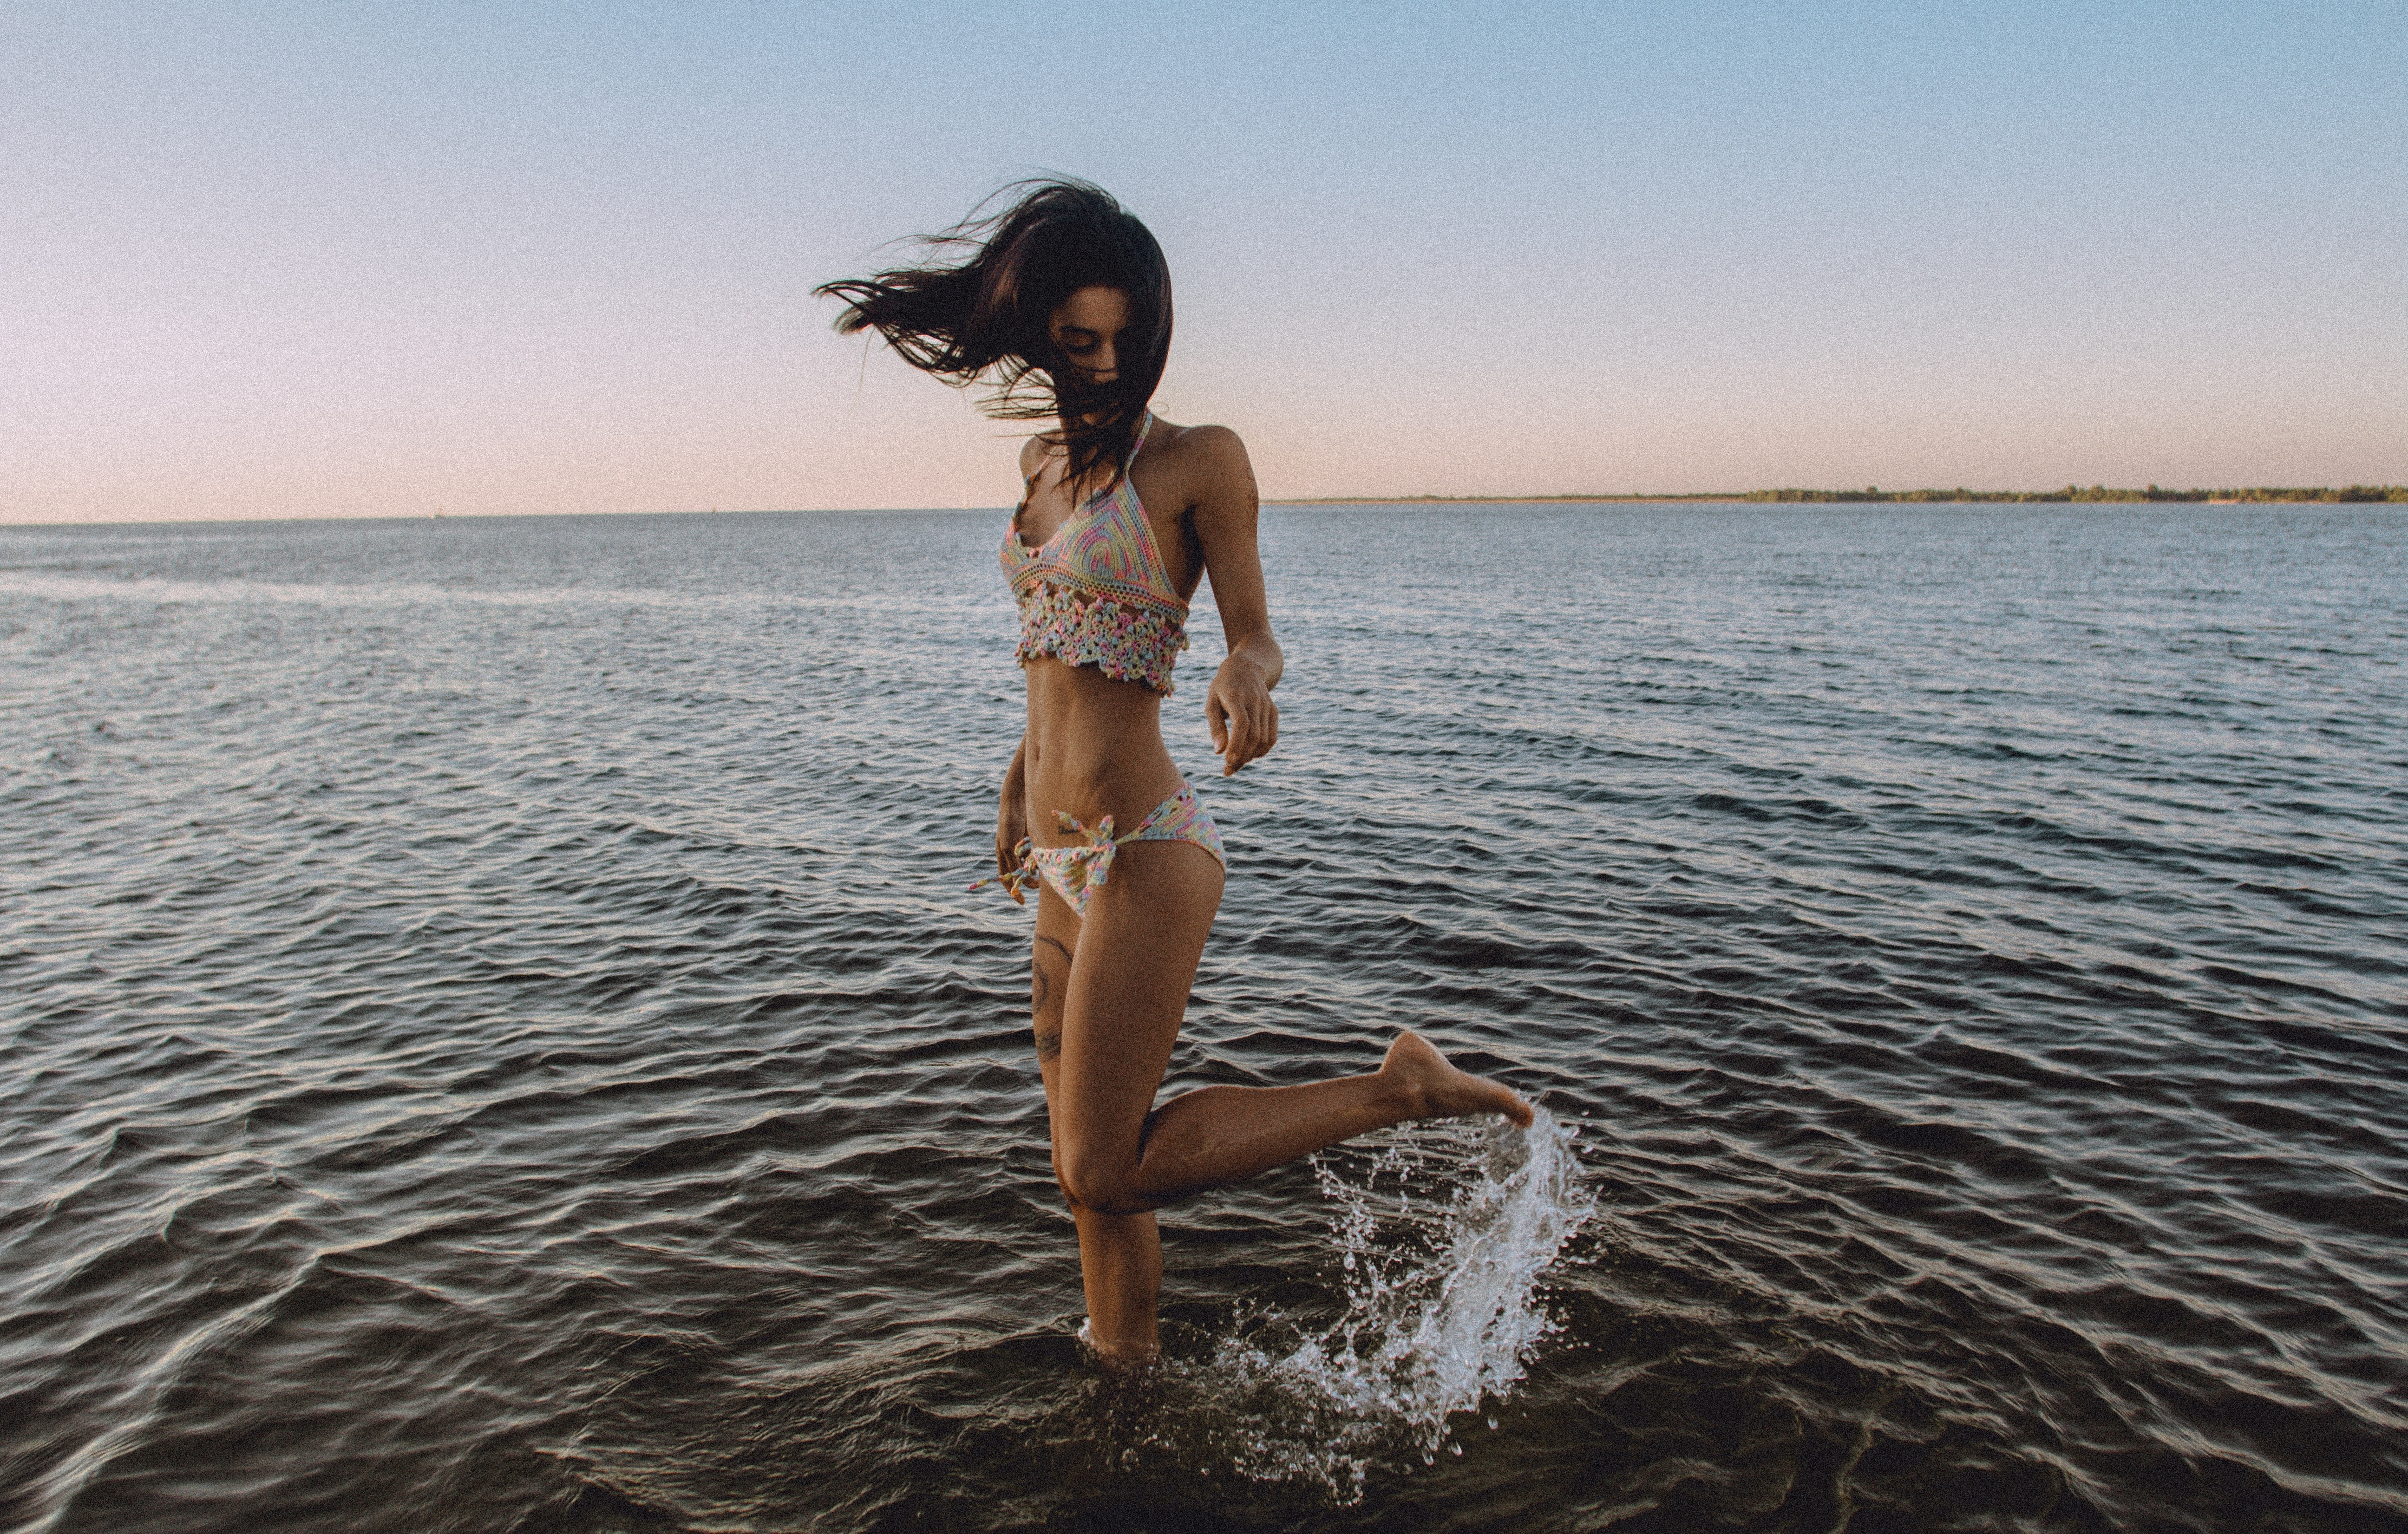 woman in white bikini on body of water posing for photo